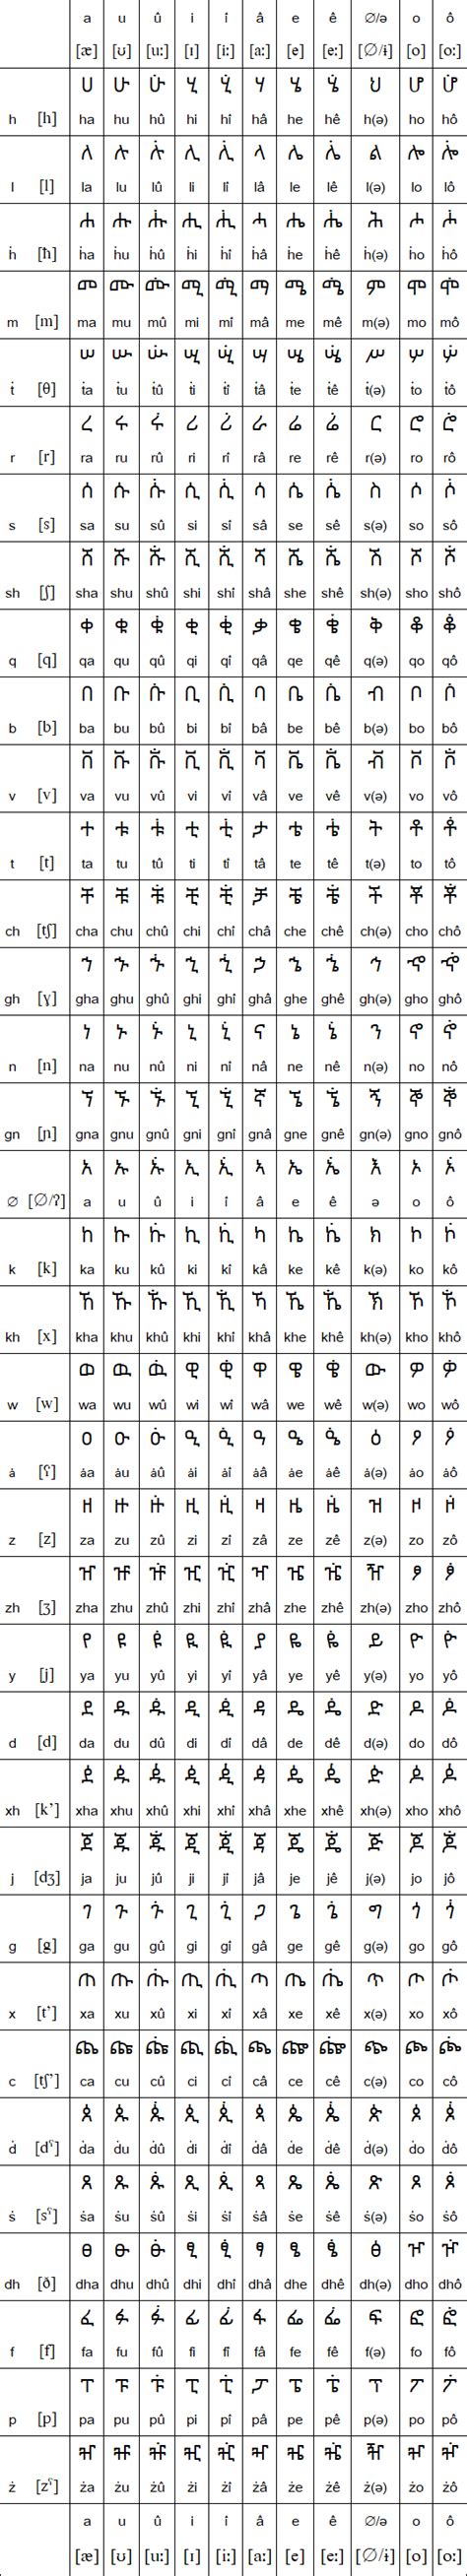 Harari Language Alphabet And Pronunciation